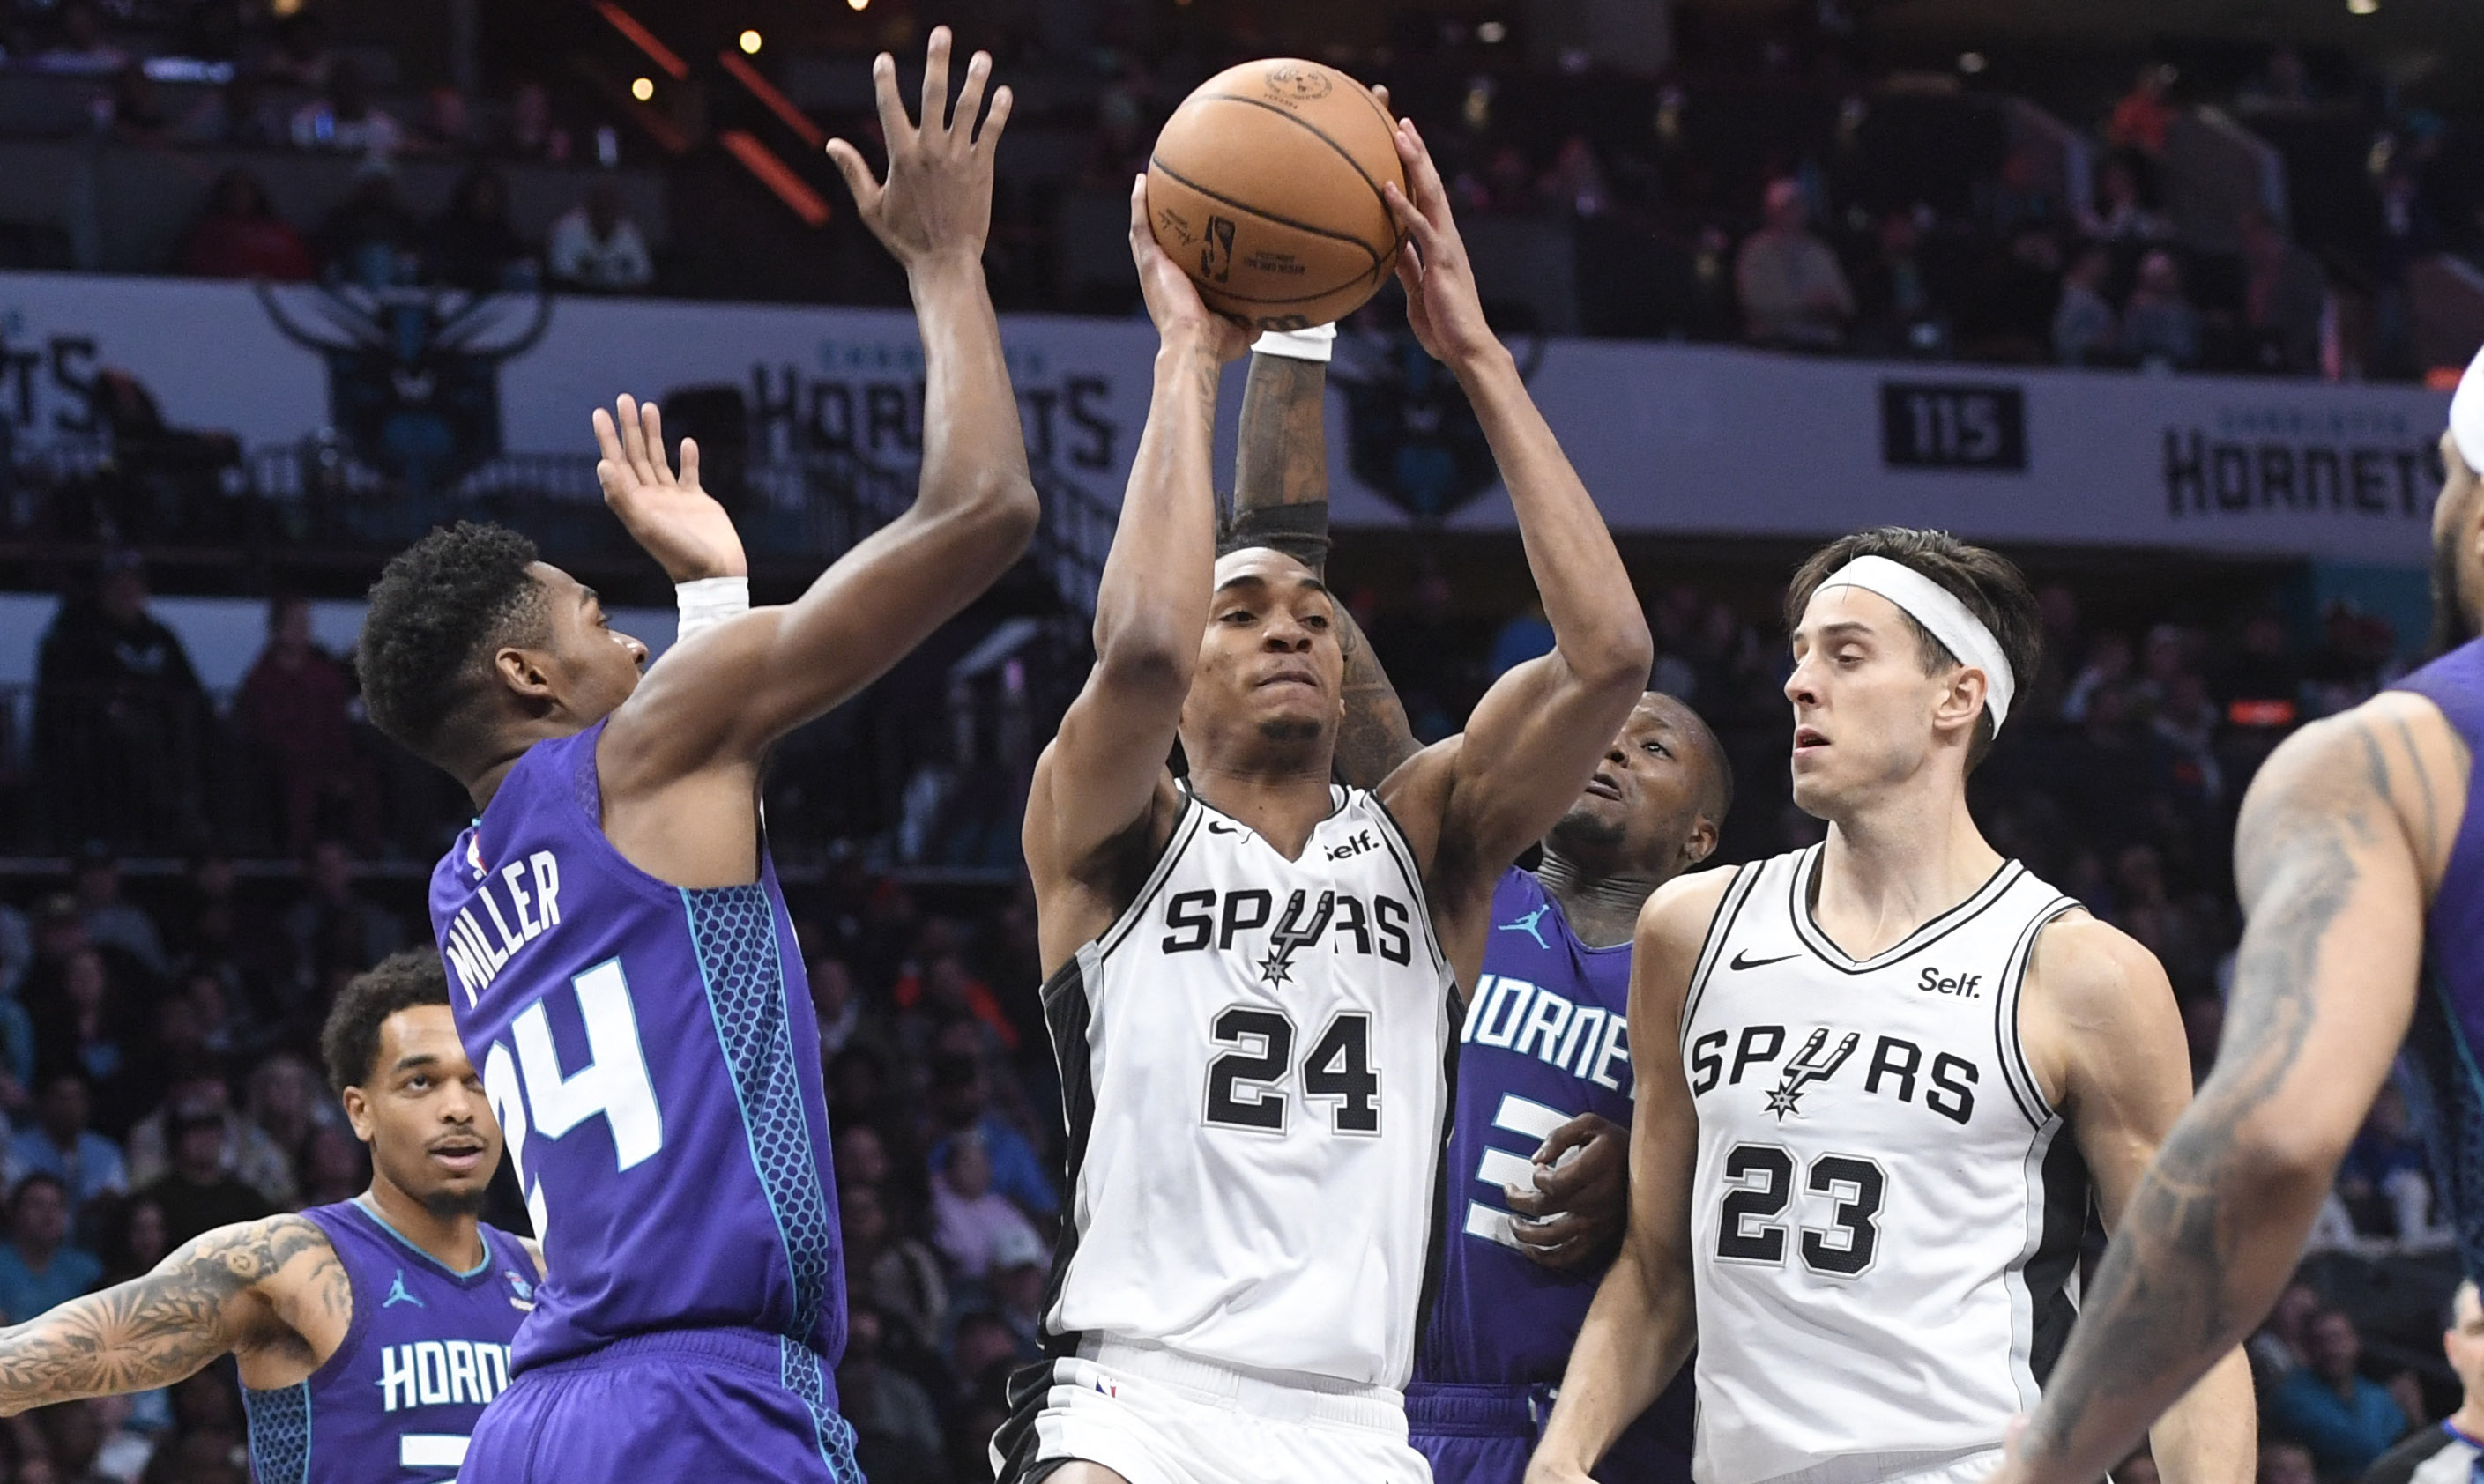 LaMelo Ball, Hornets fend off Spurs to halt 6-game skid - Stabroek News